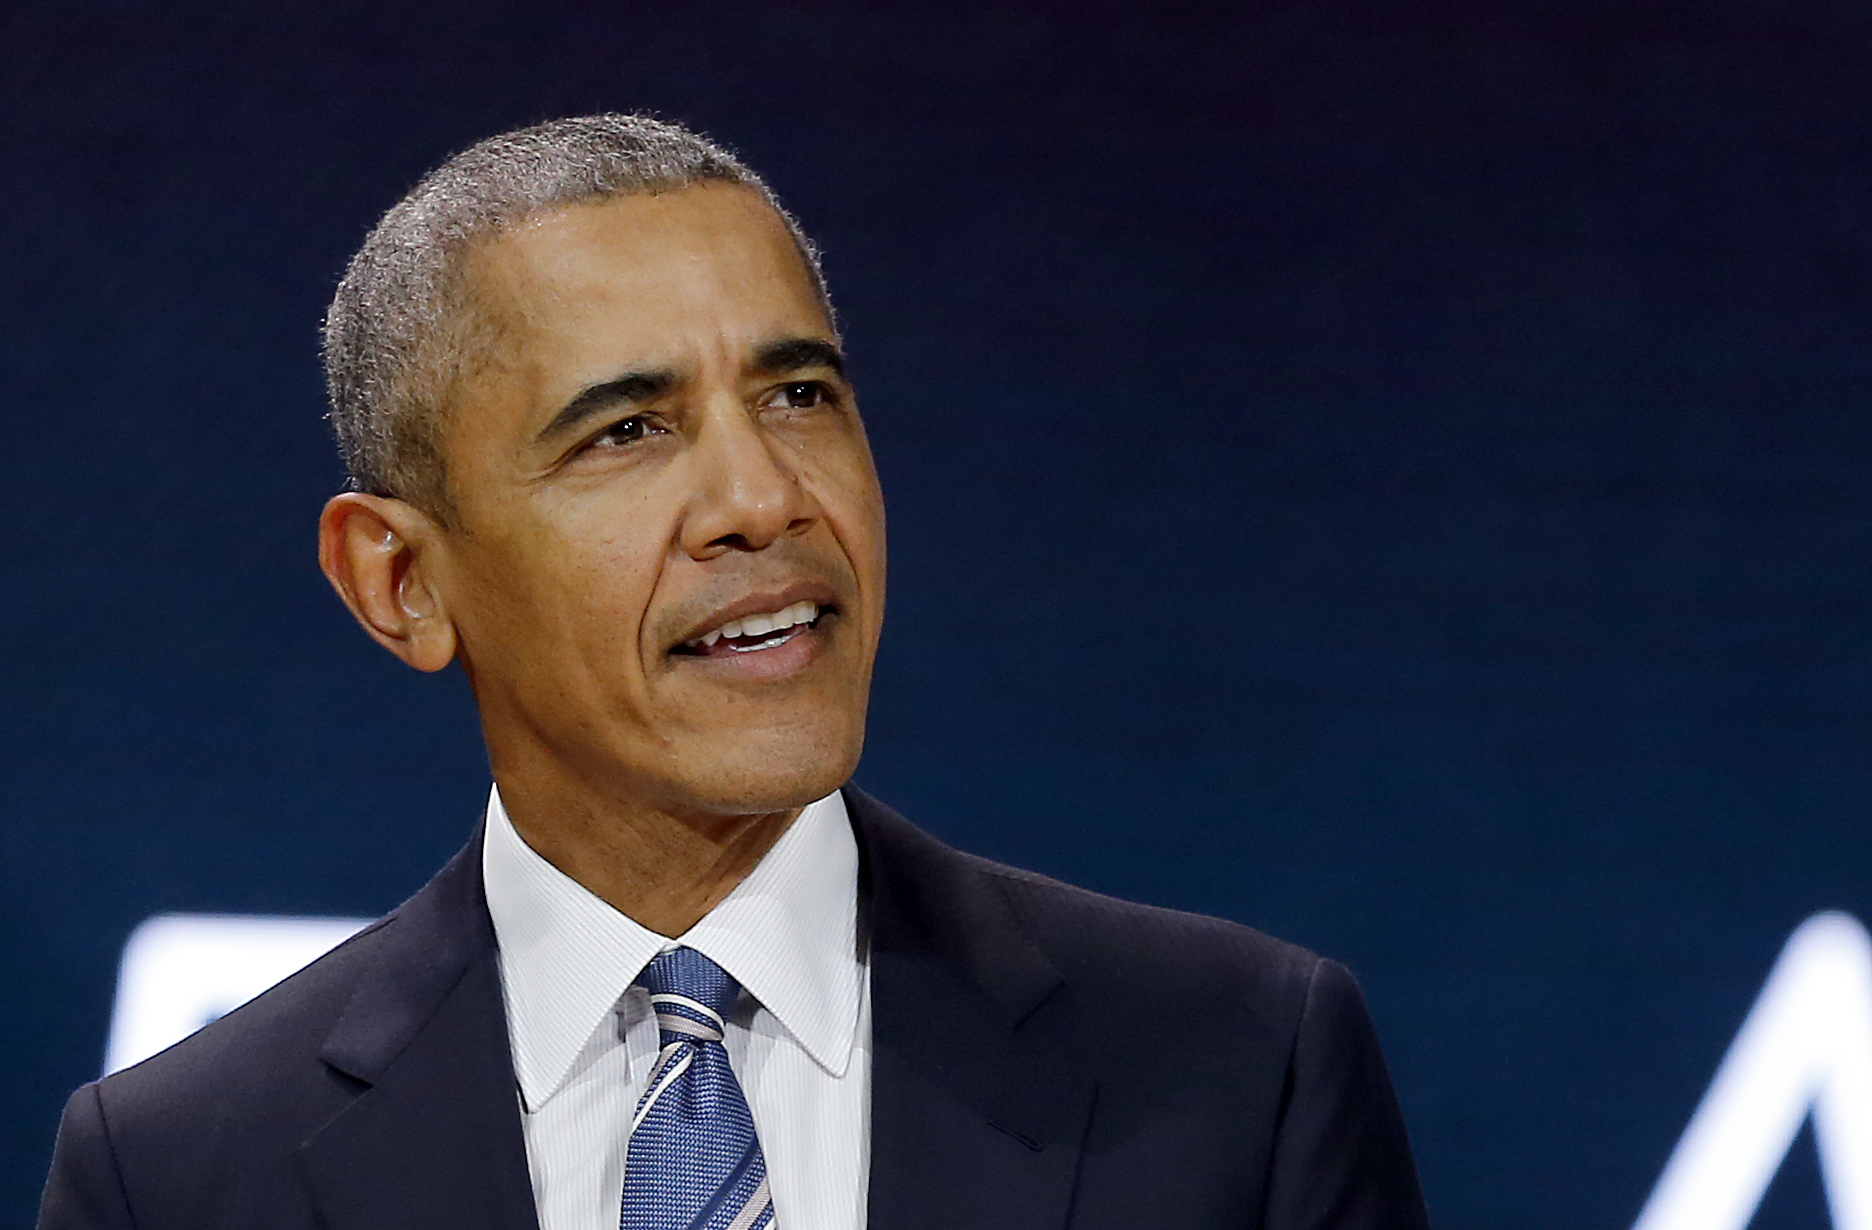 Obama raises USD 7.6 million for Joe Bidens campaign